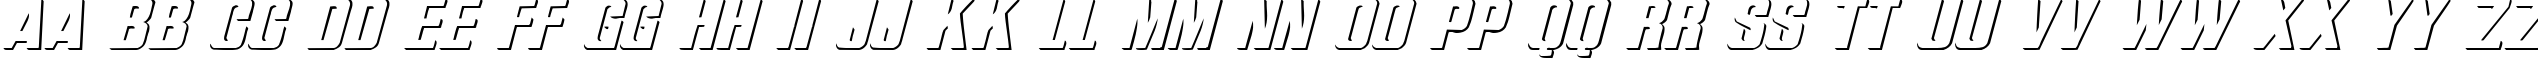 Пример написания английского алфавита шрифтом Relief Grotesk Italic